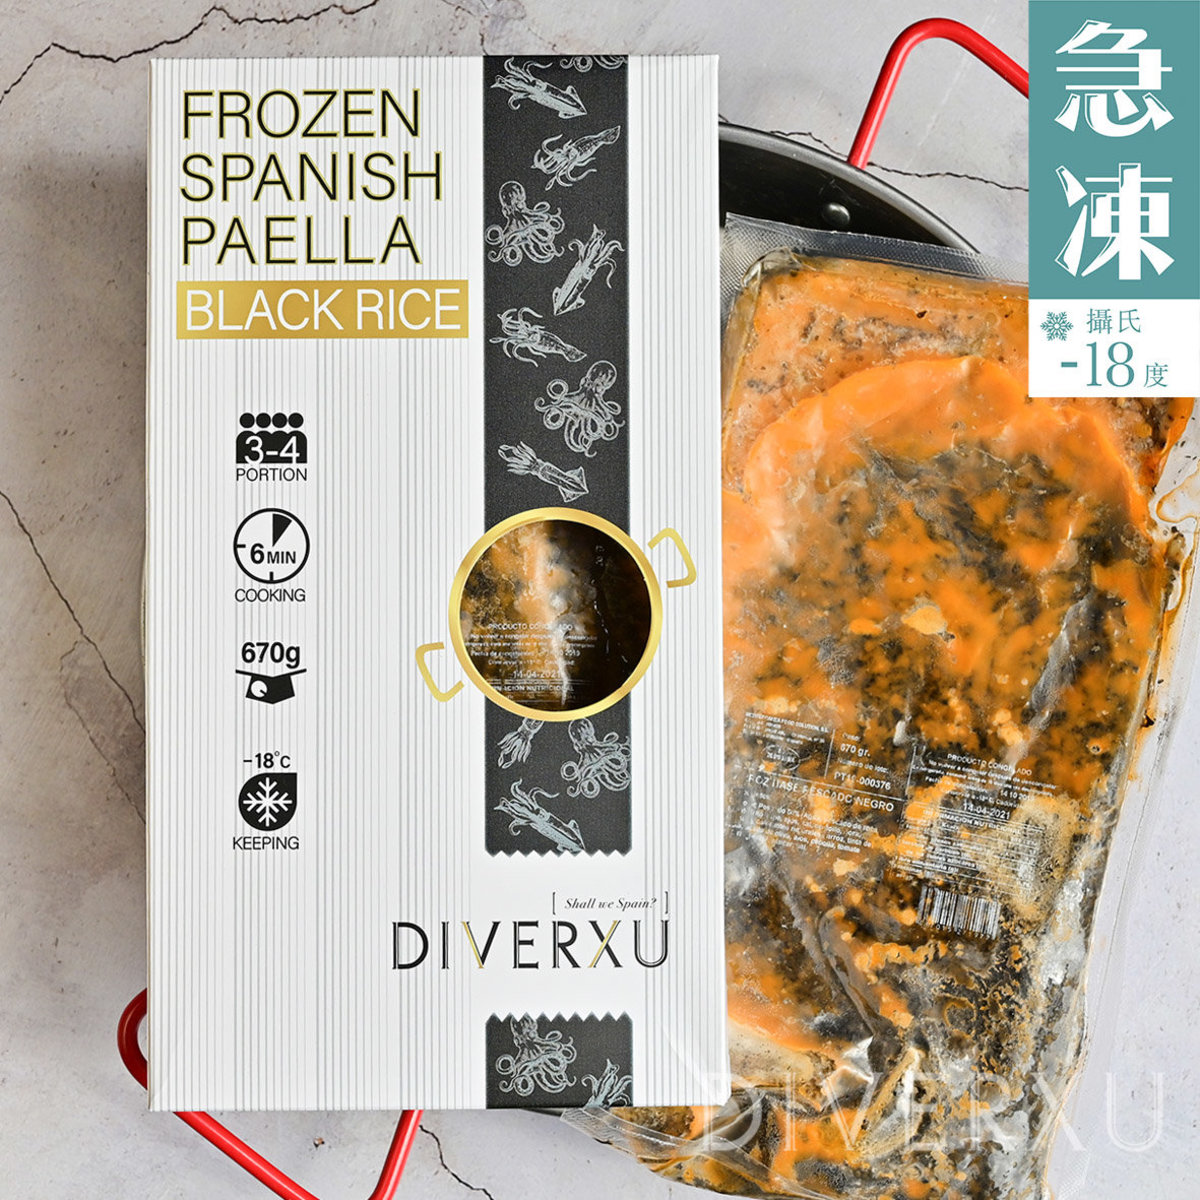 Semi-cooked Frozen Spanish Paella-Black Rice (650g) (Frozen -18°C)